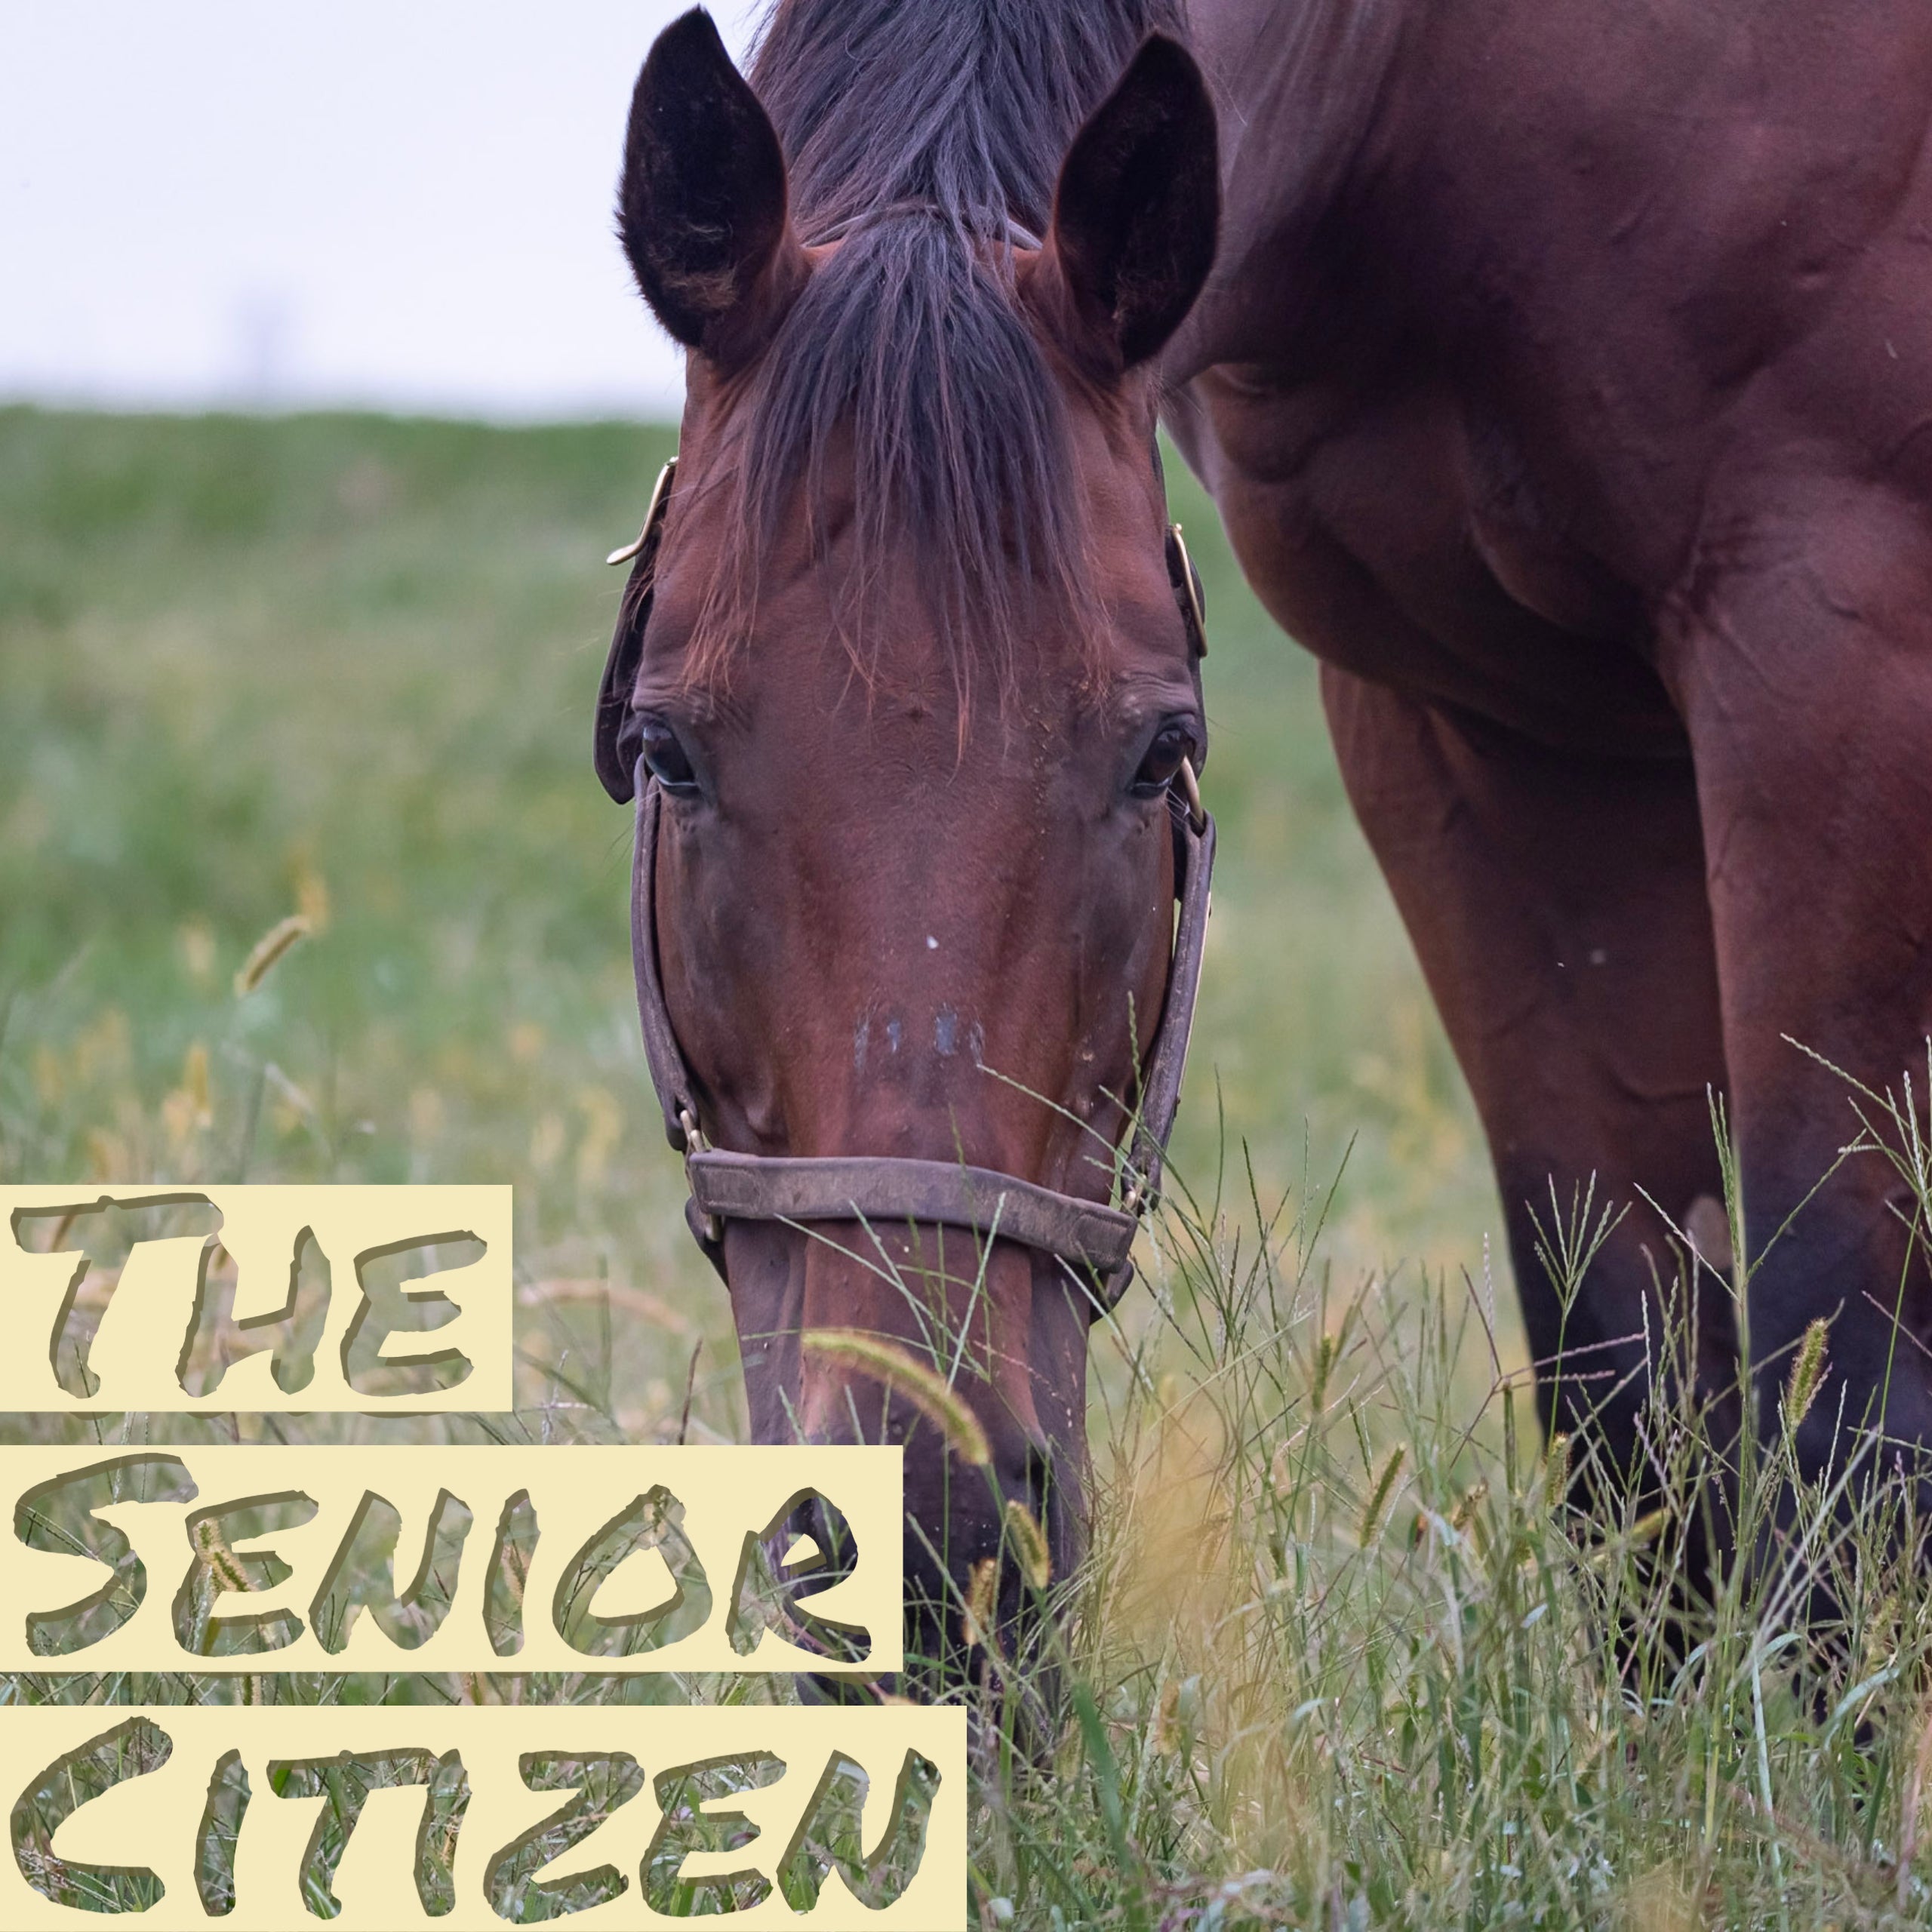 senior horses